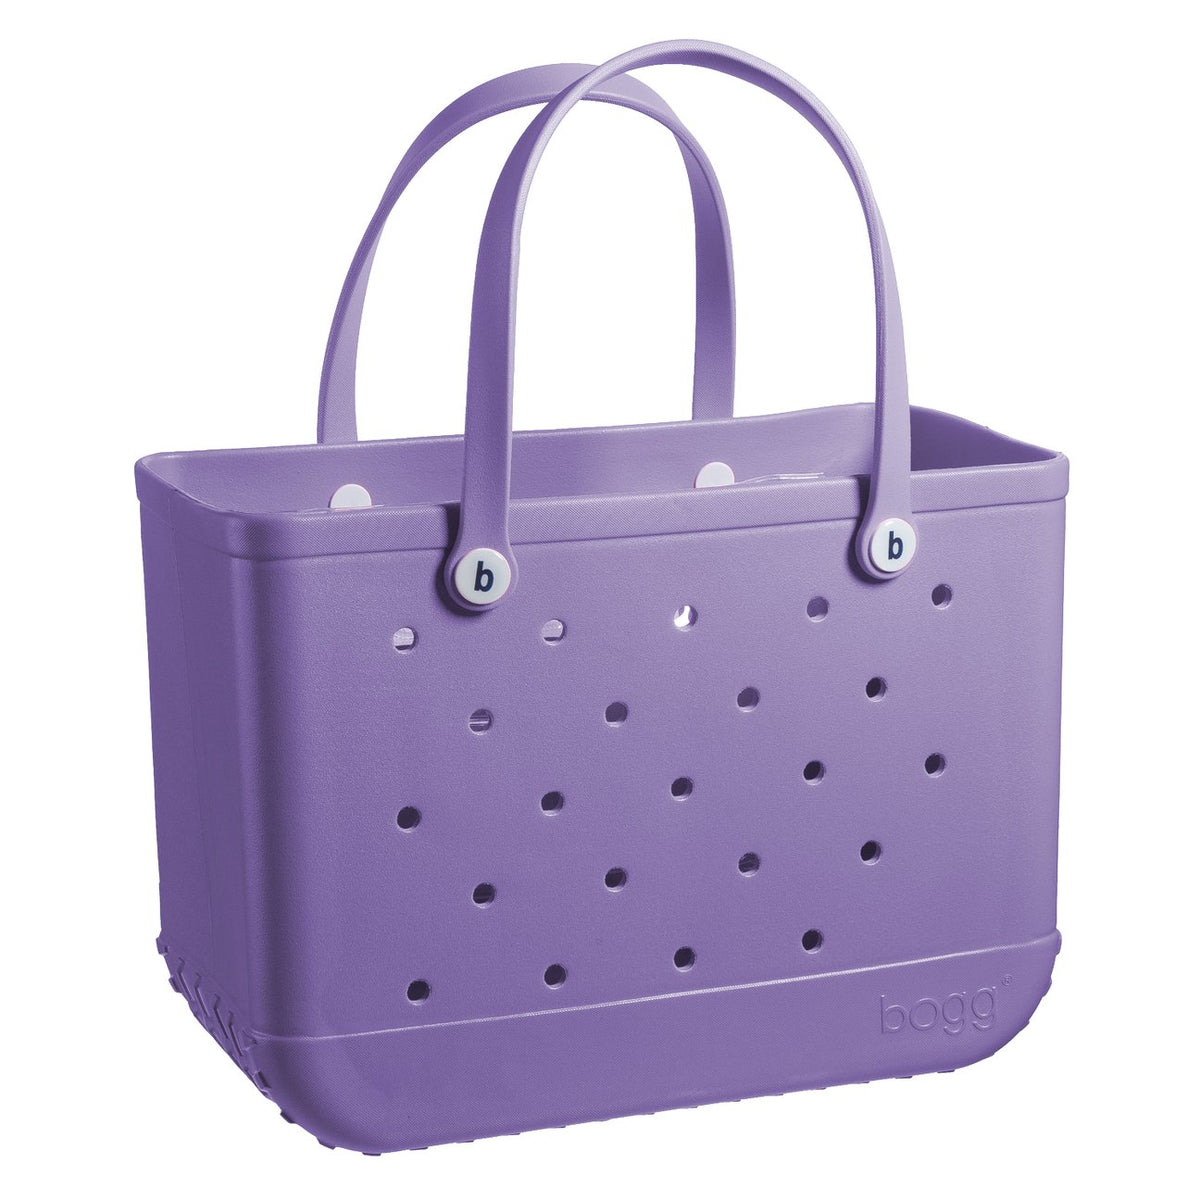 Bogg Bags Small Baby Bogg Bag - Purple $ 69.95